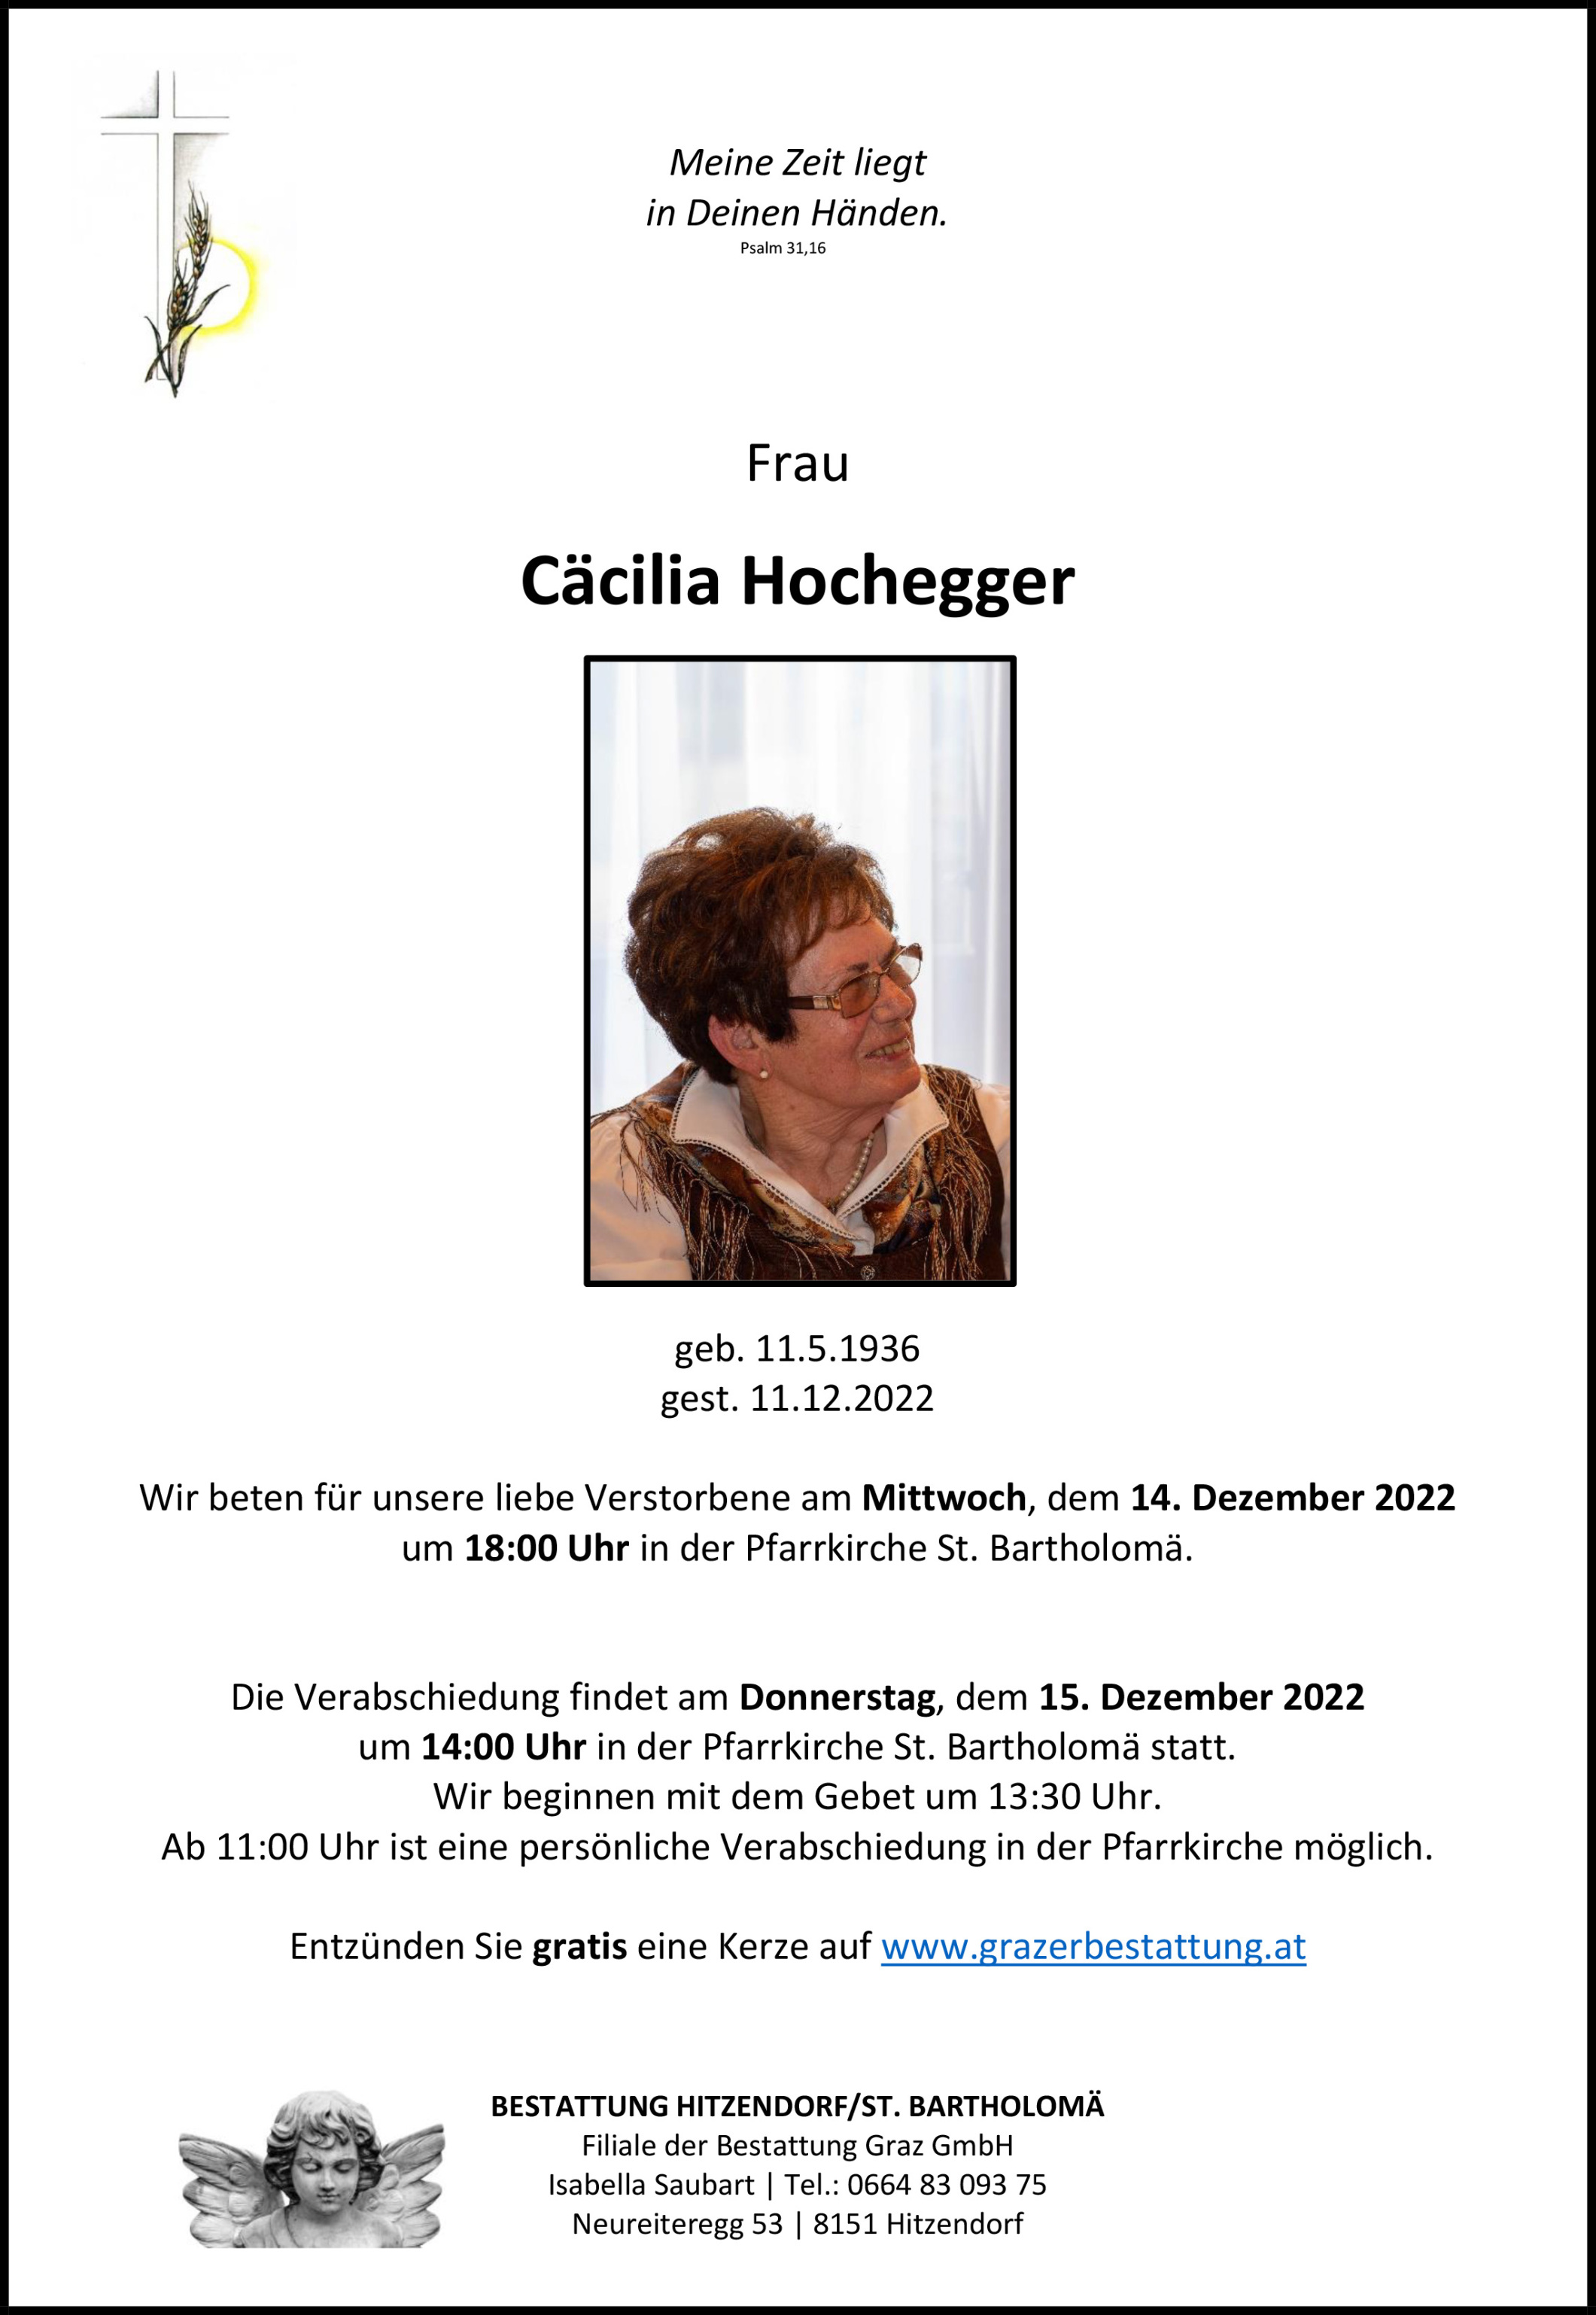 Cäcilia Hochegger